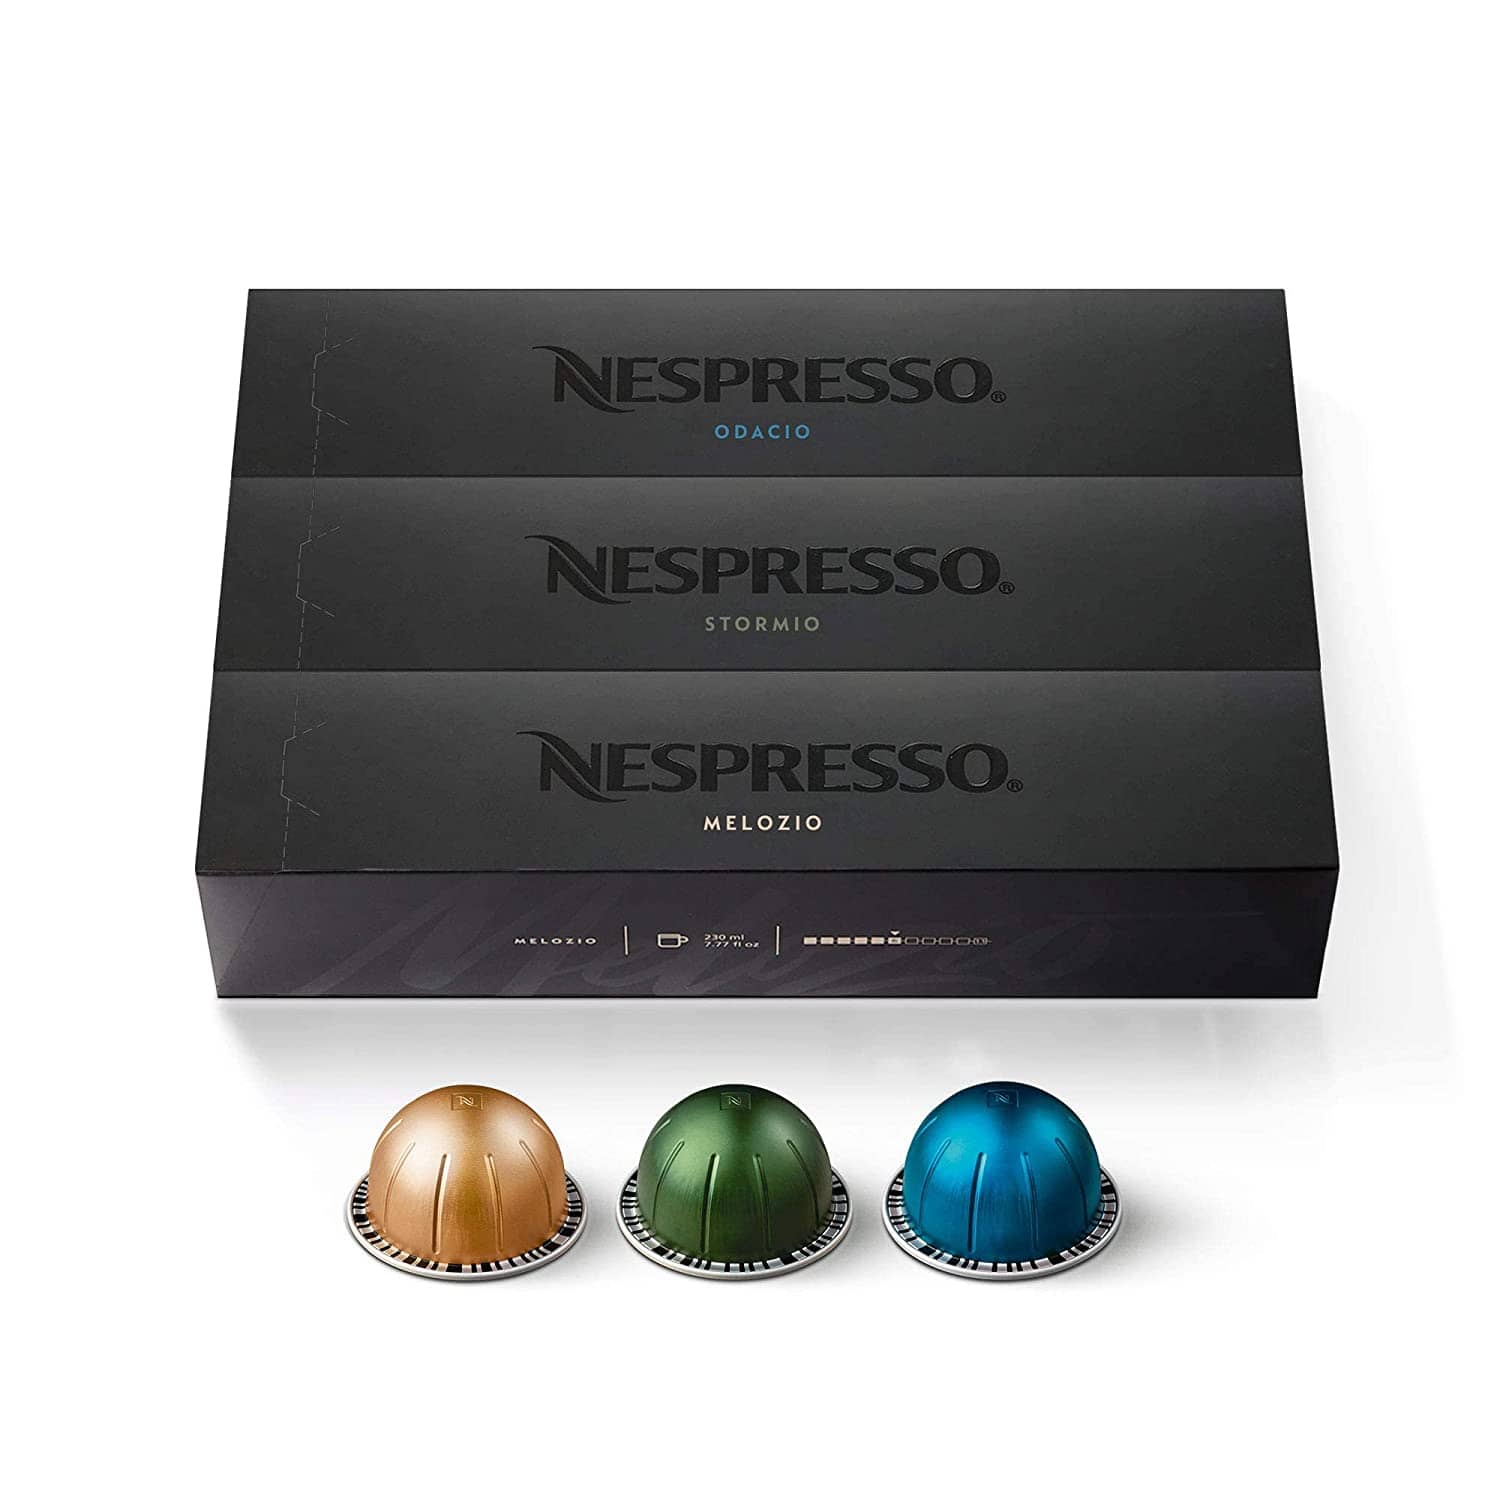 Nespresso capsule variety pack